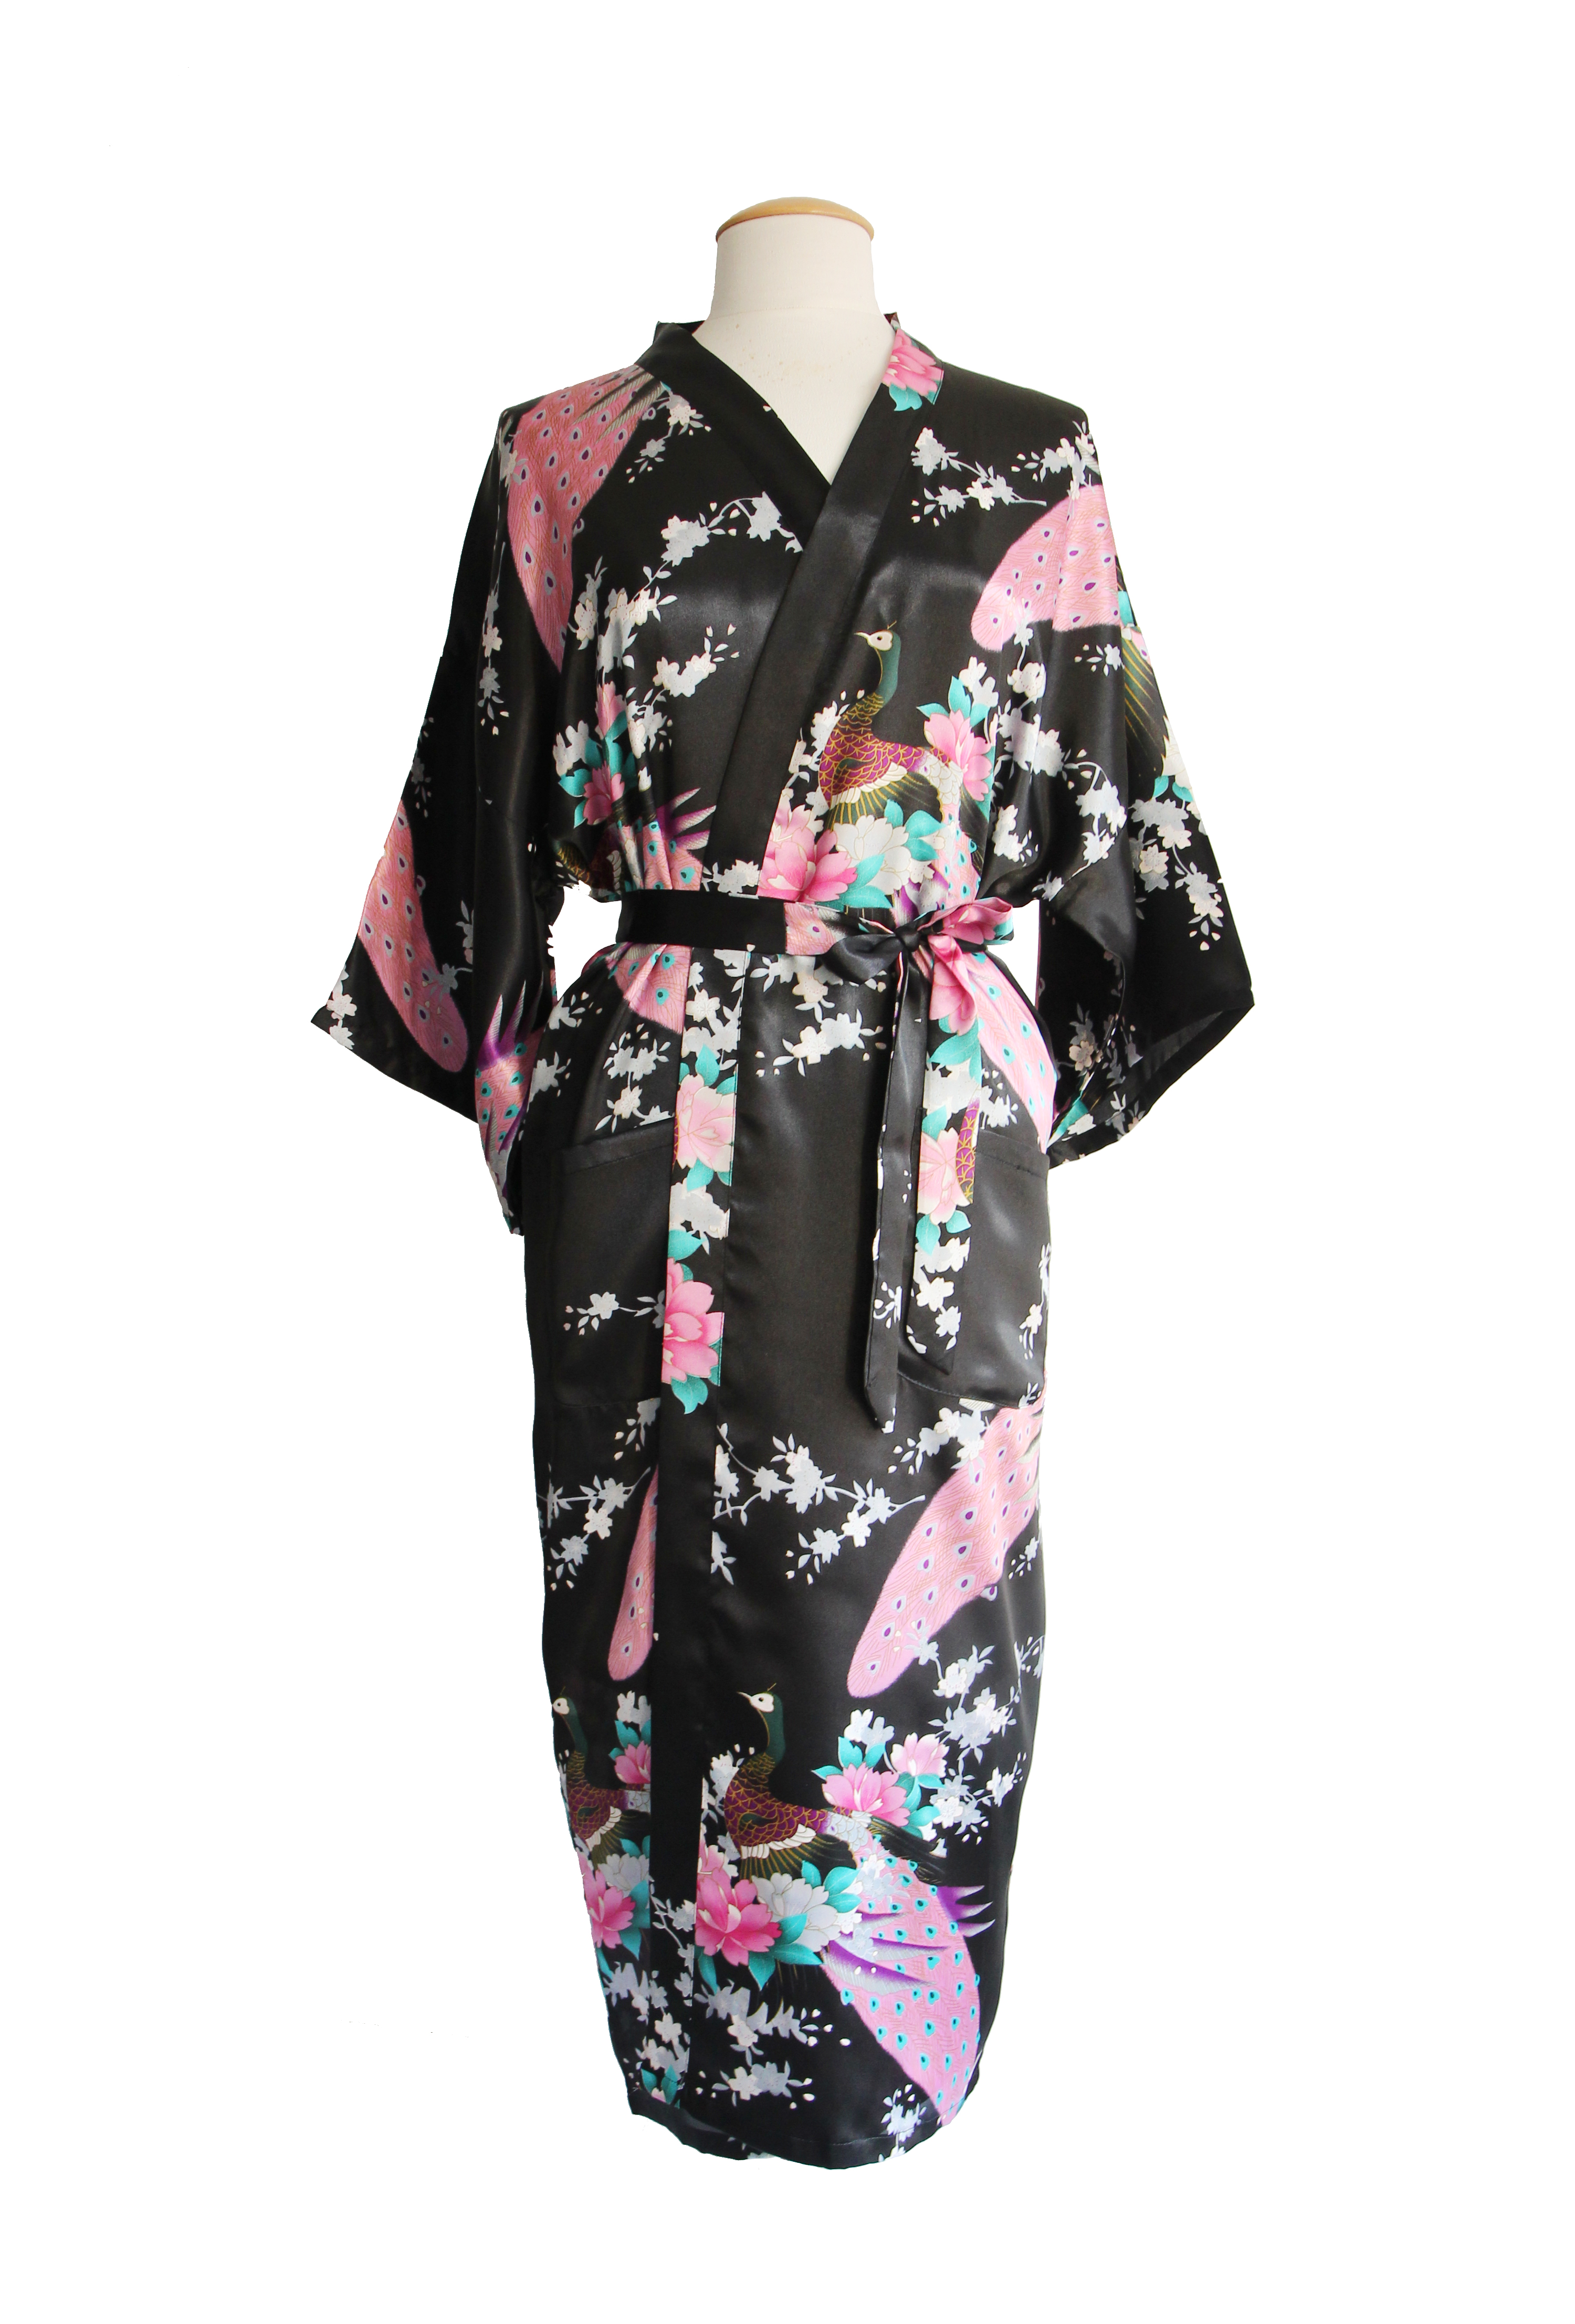 Rechtmatig nauwkeurig wetgeving Zwarte kimono satijn Japanse satijnen badjas kamerjas geisha ochtendjas  yukata kopen?